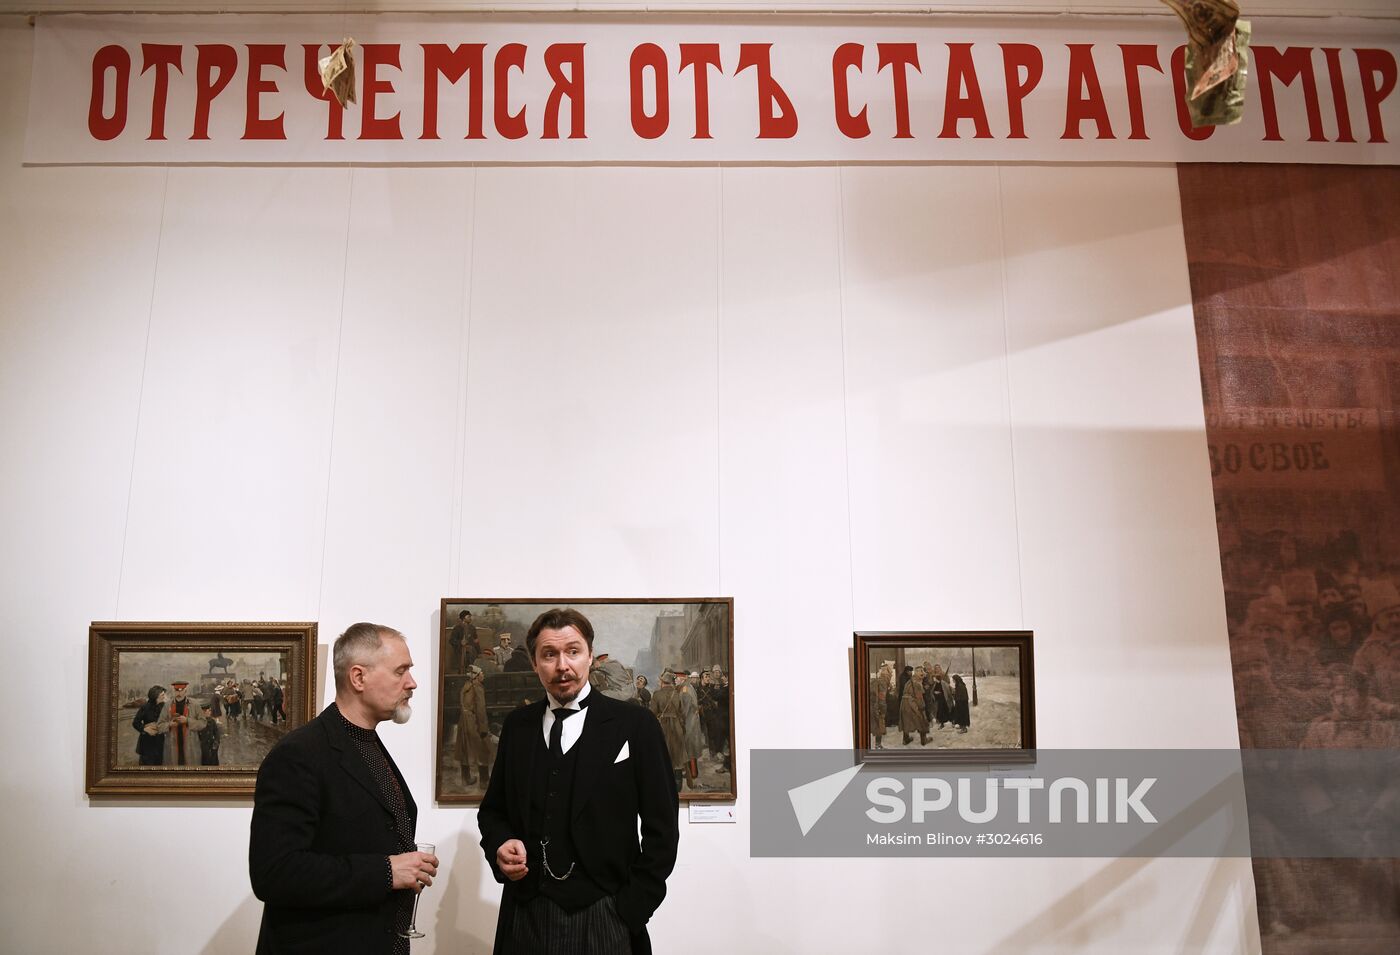 Exhibition "Revolution - The First Salvo - The Uneasy Times Through the Eyes of Artist Ivan Vladimirov"